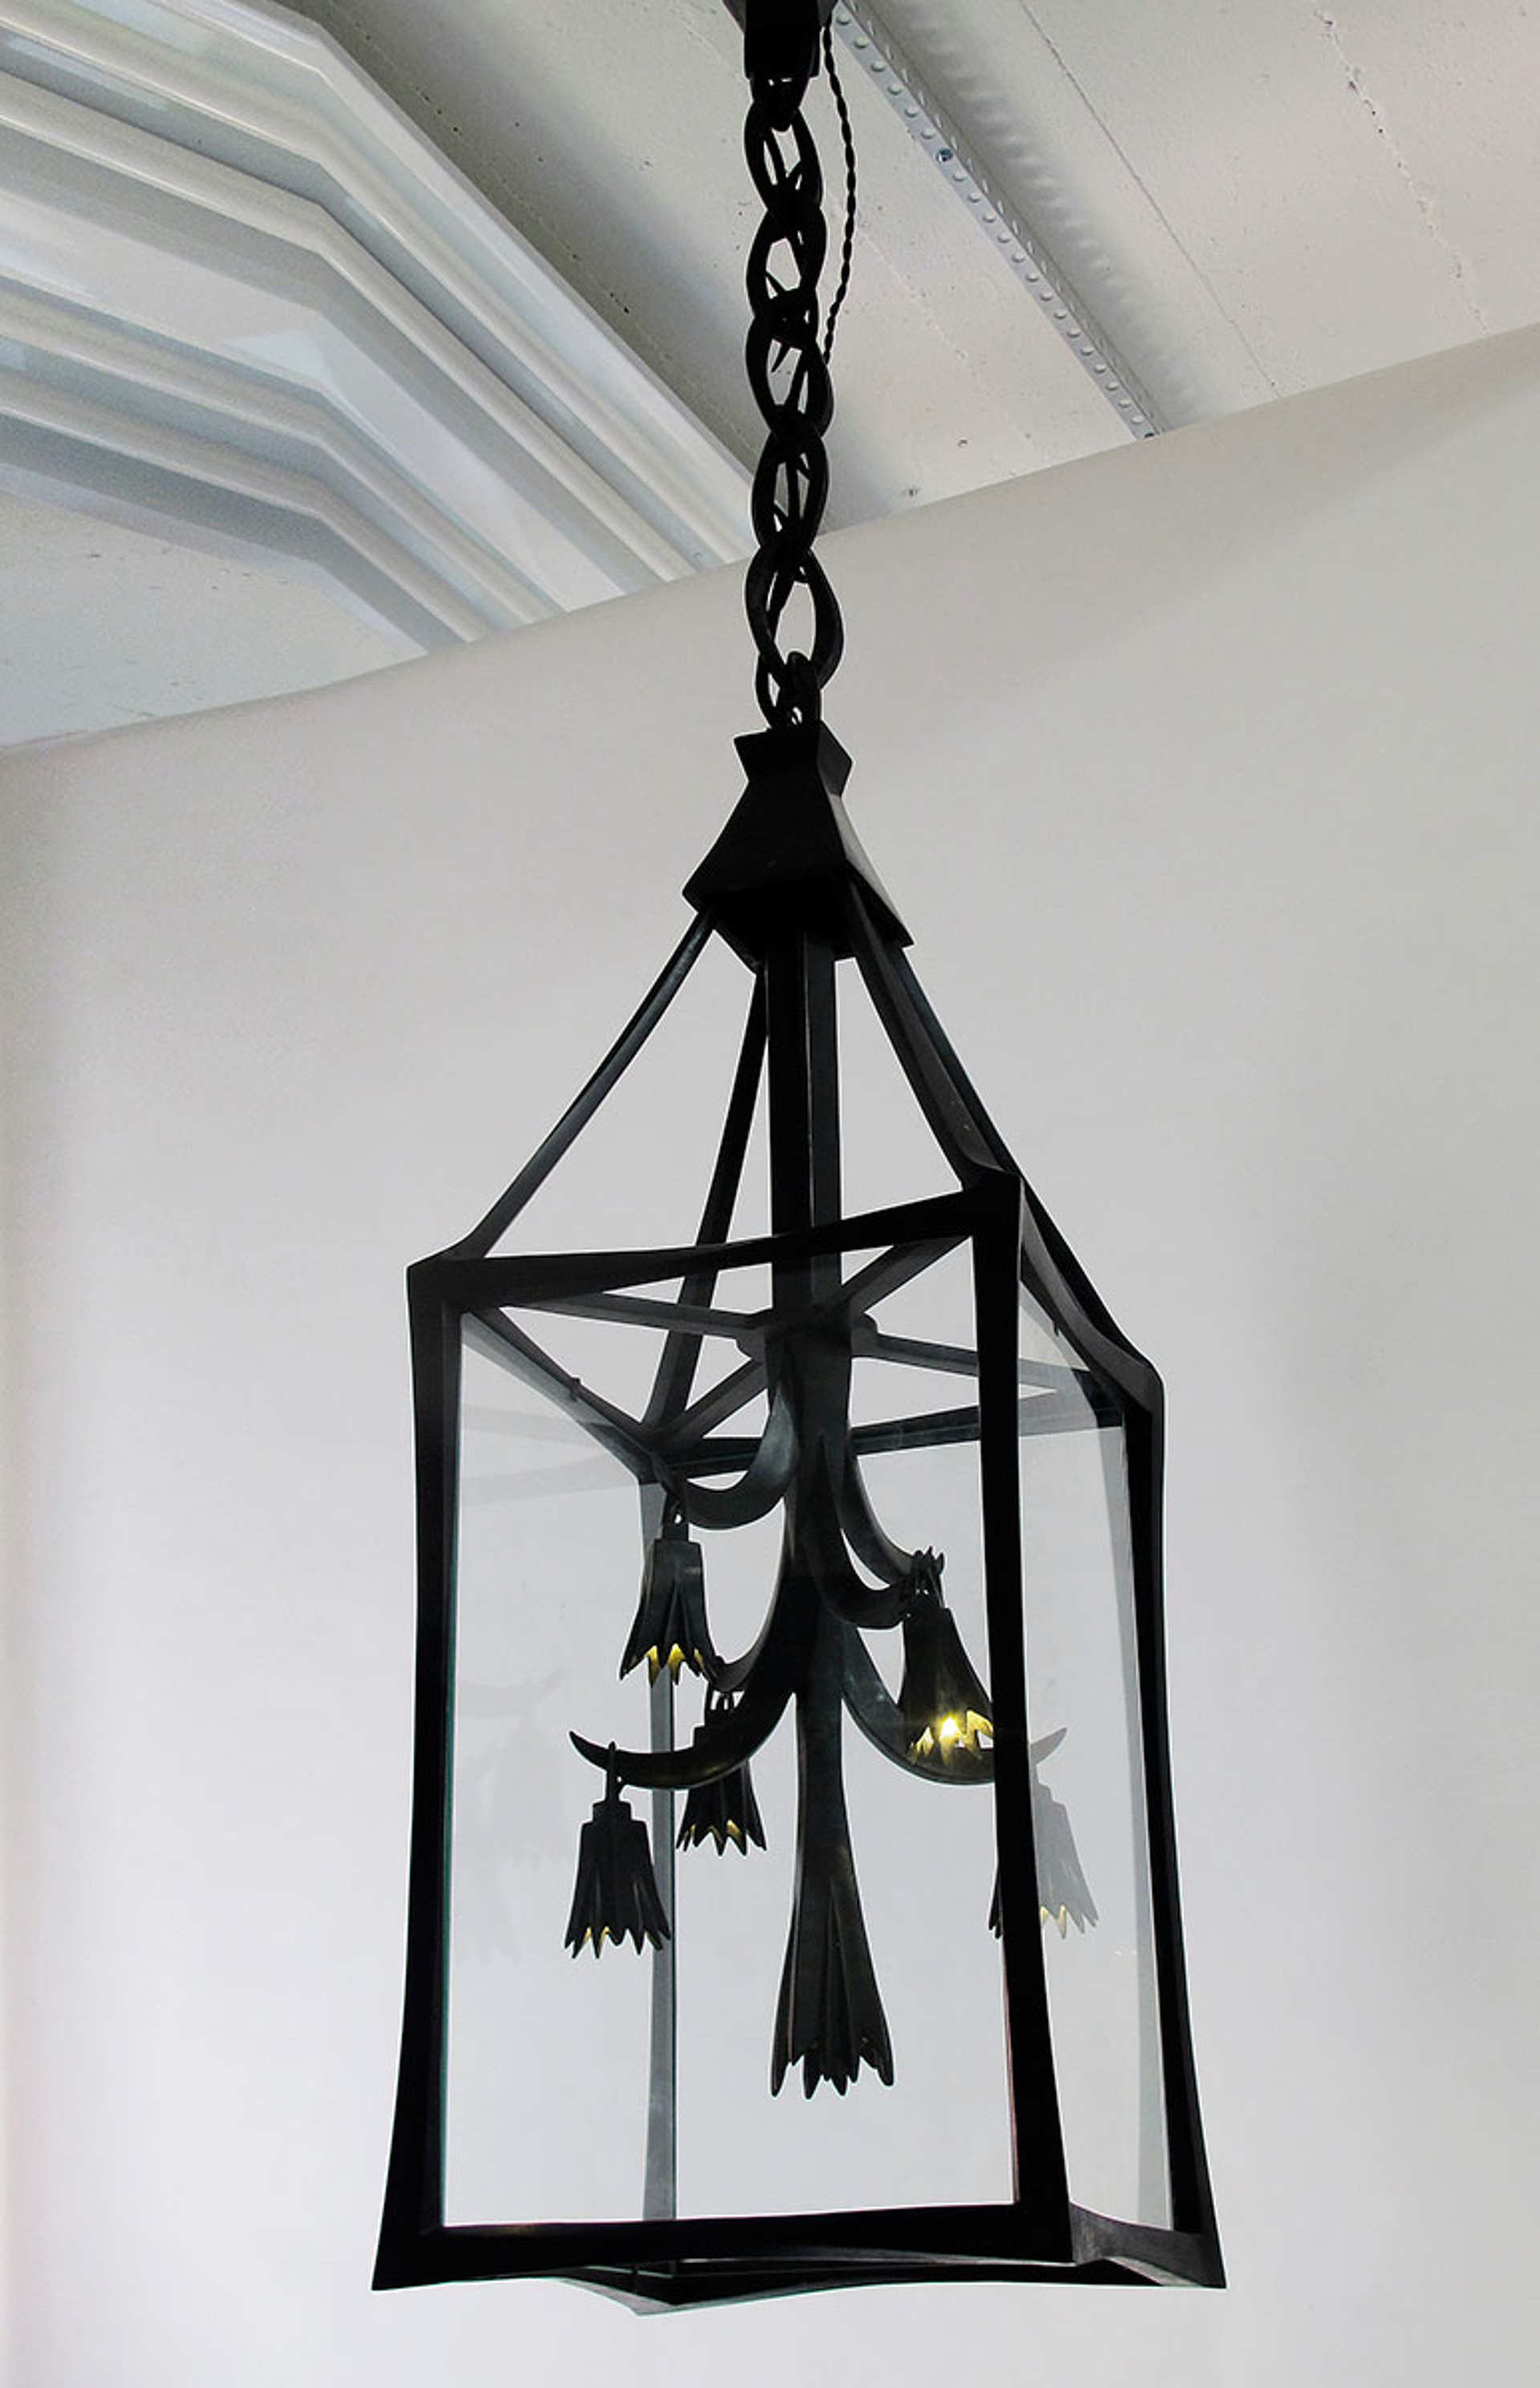 Bronze lantern by Anasthasia Millot